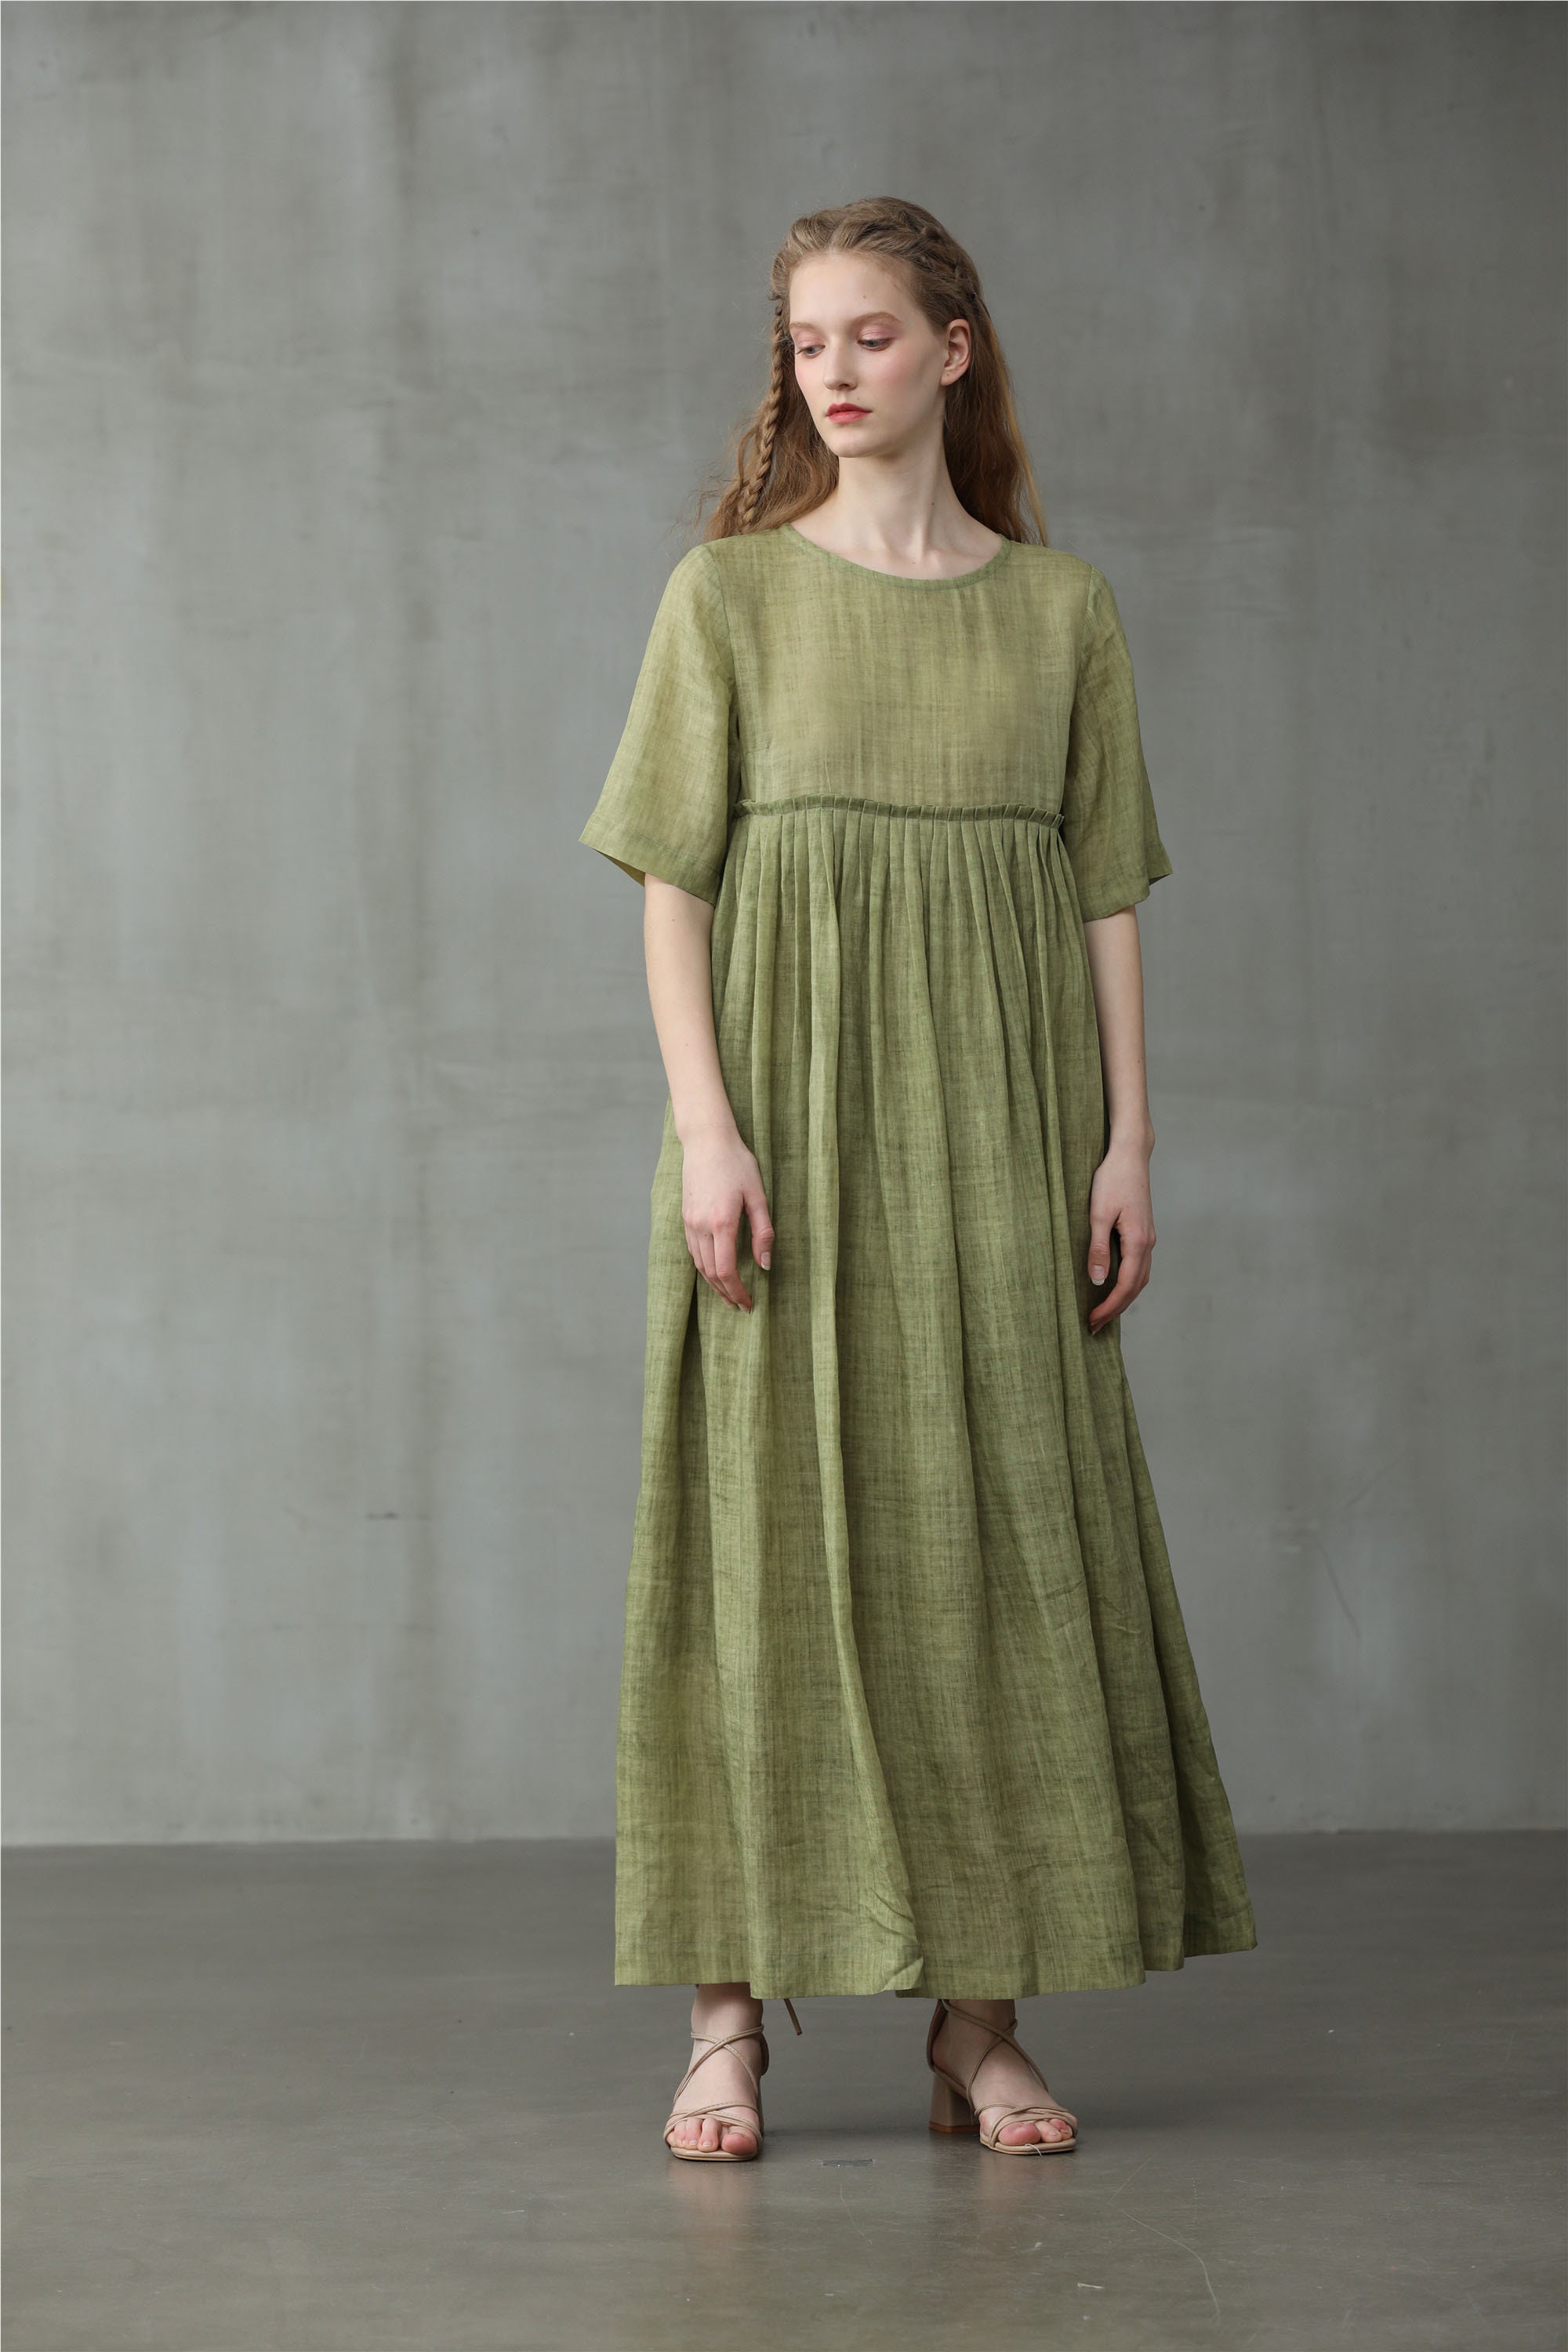 Empired linen dress soft olive pintucked dress maxi dress | Etsy